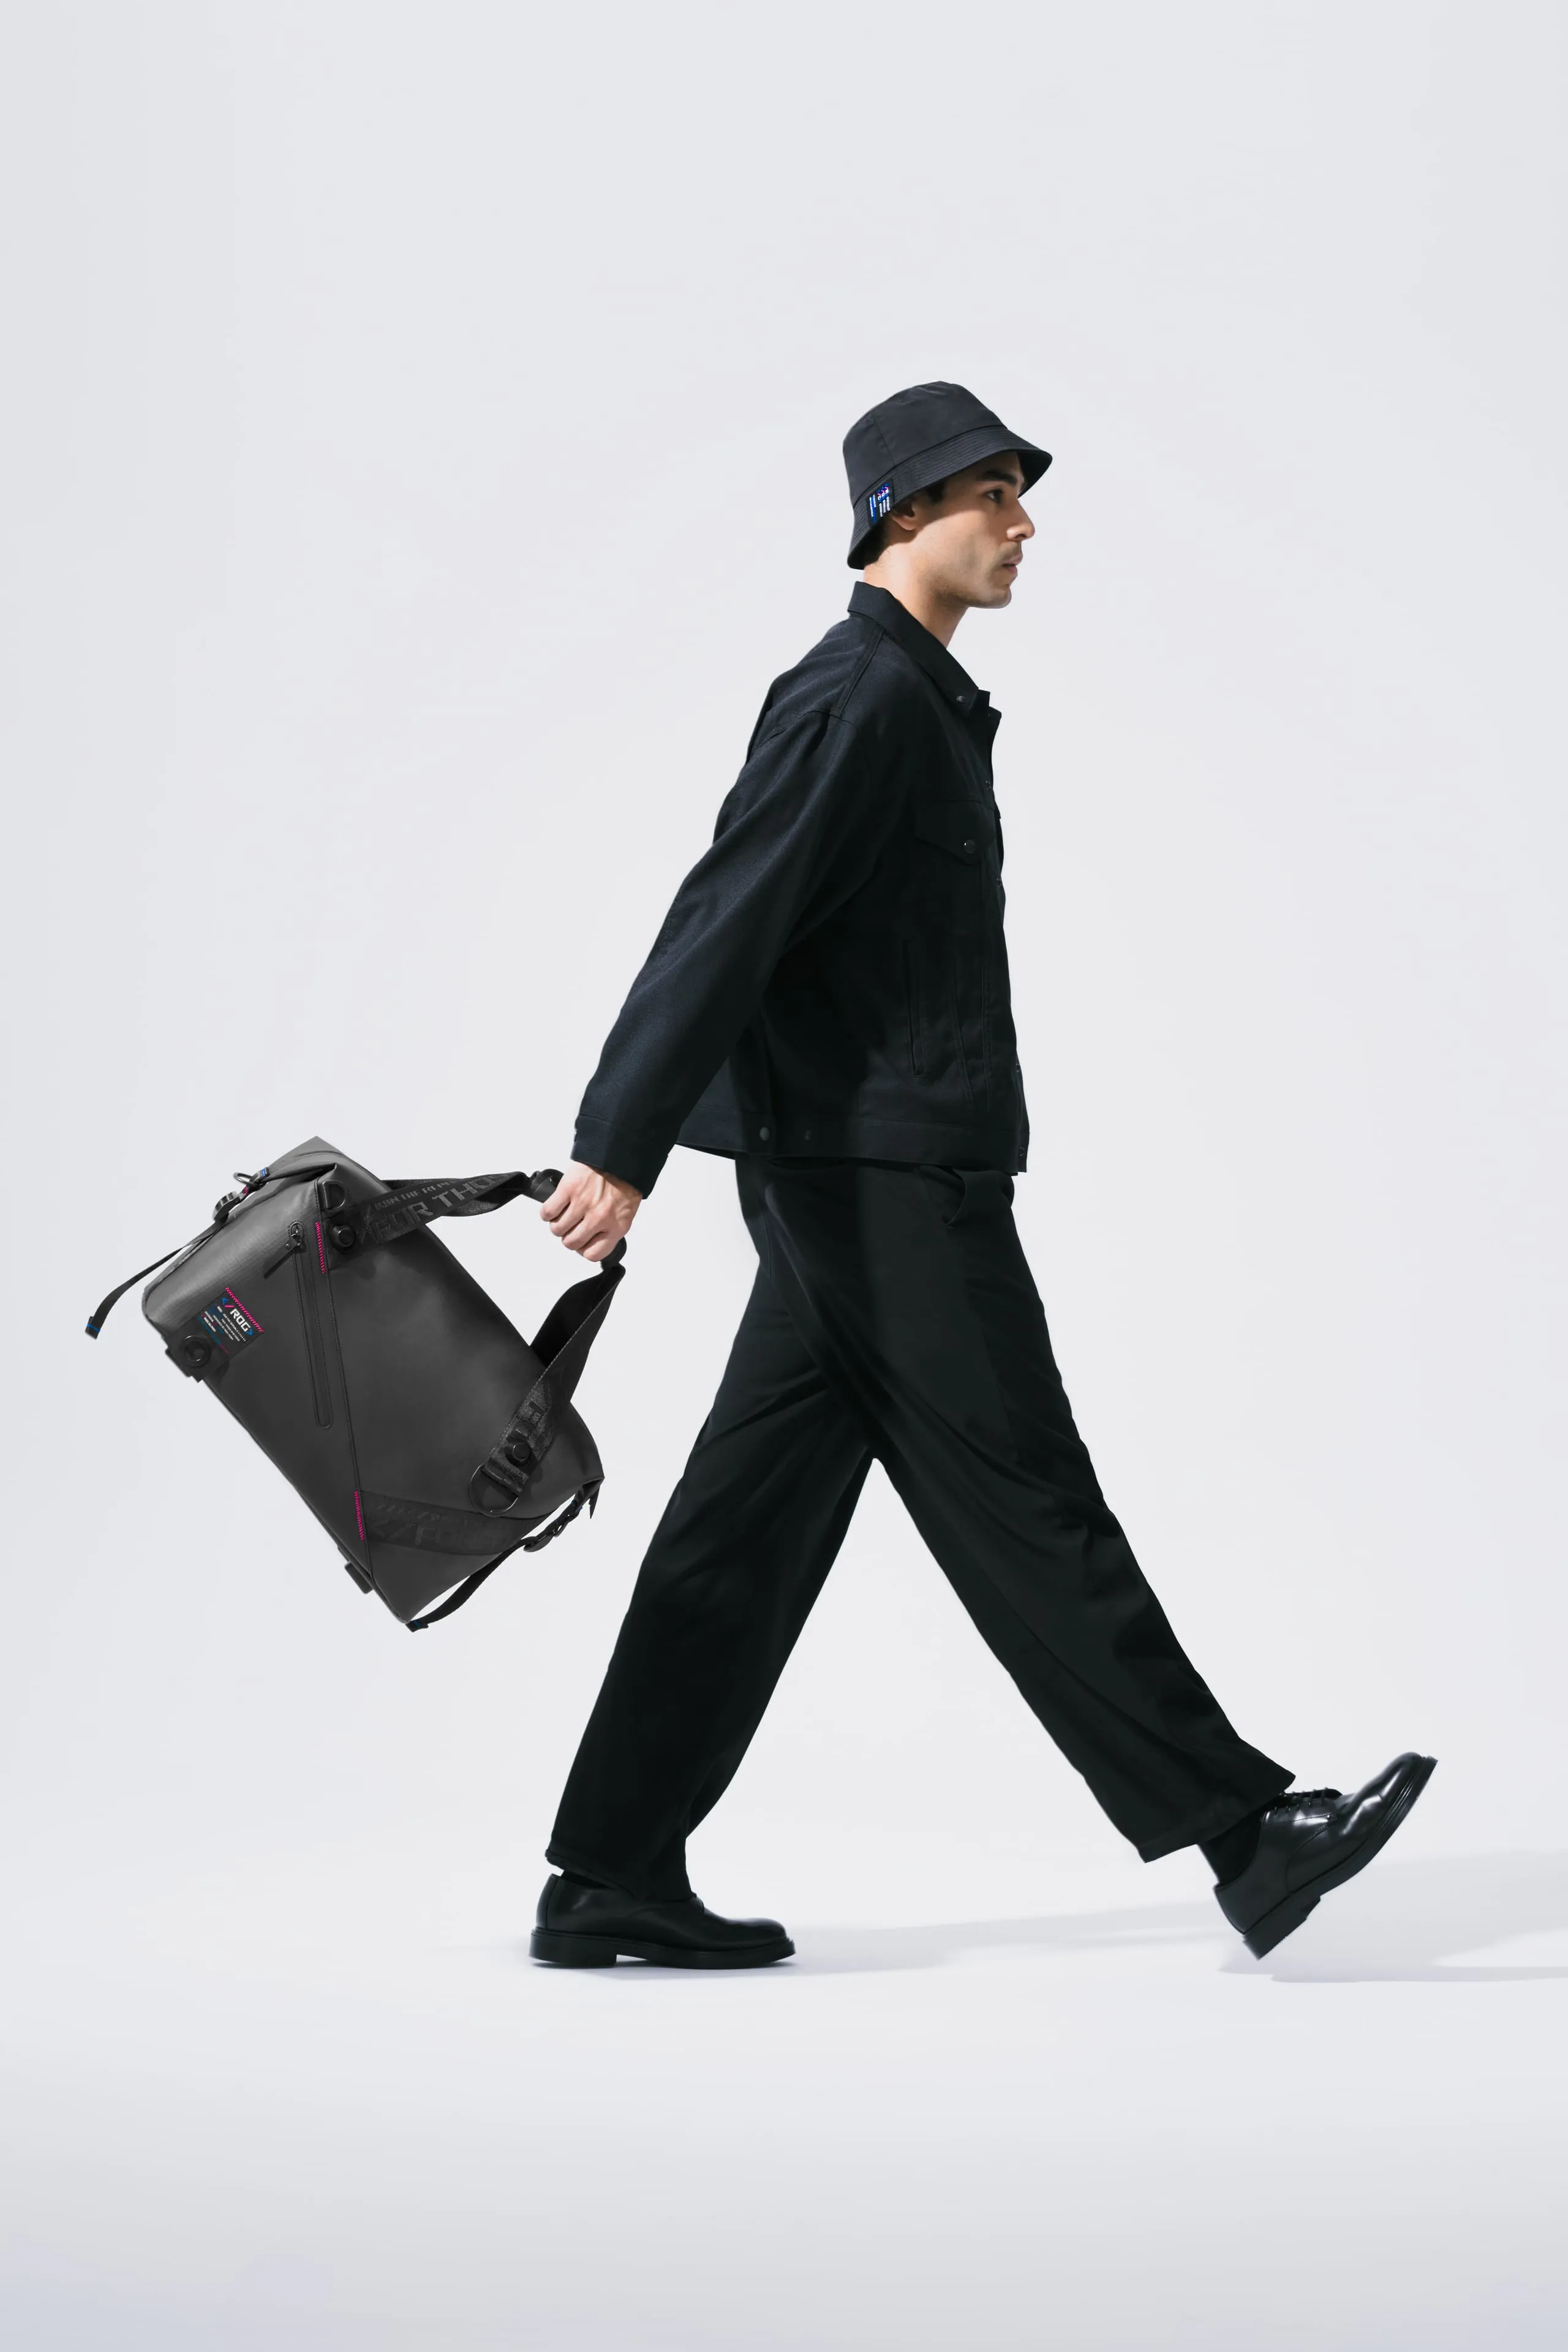 Man in midstride, carrying an ROG SLASH Duffle Bag by hand behind him